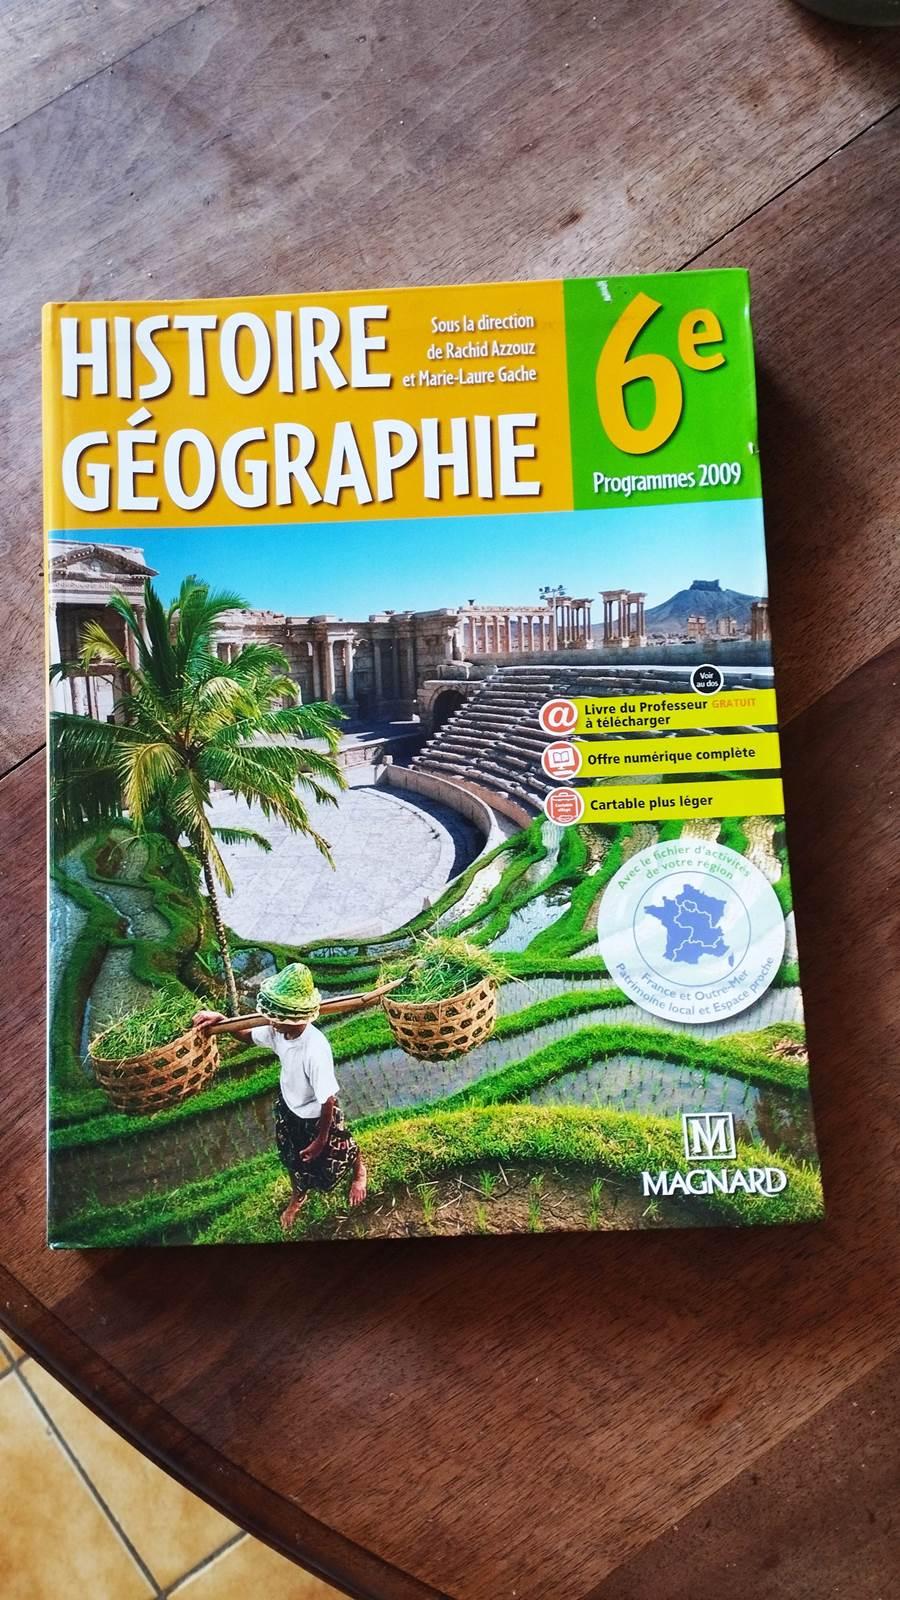 Histoire geographie magnard 2009 6eme005 1